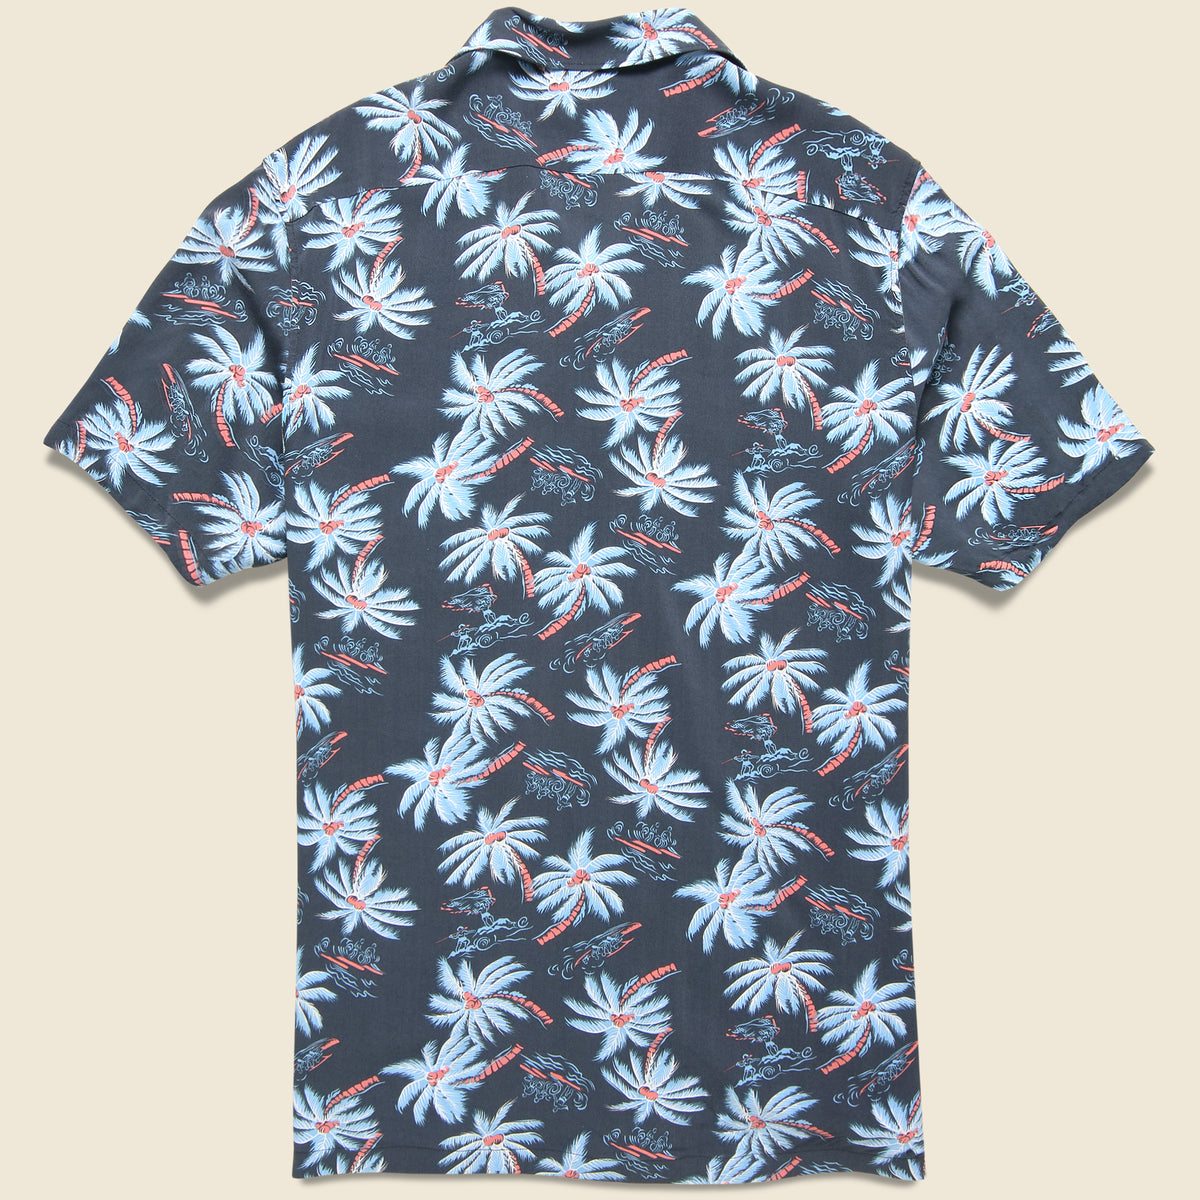 Kona Camp Shirt - Midnight Palm Hawaiian